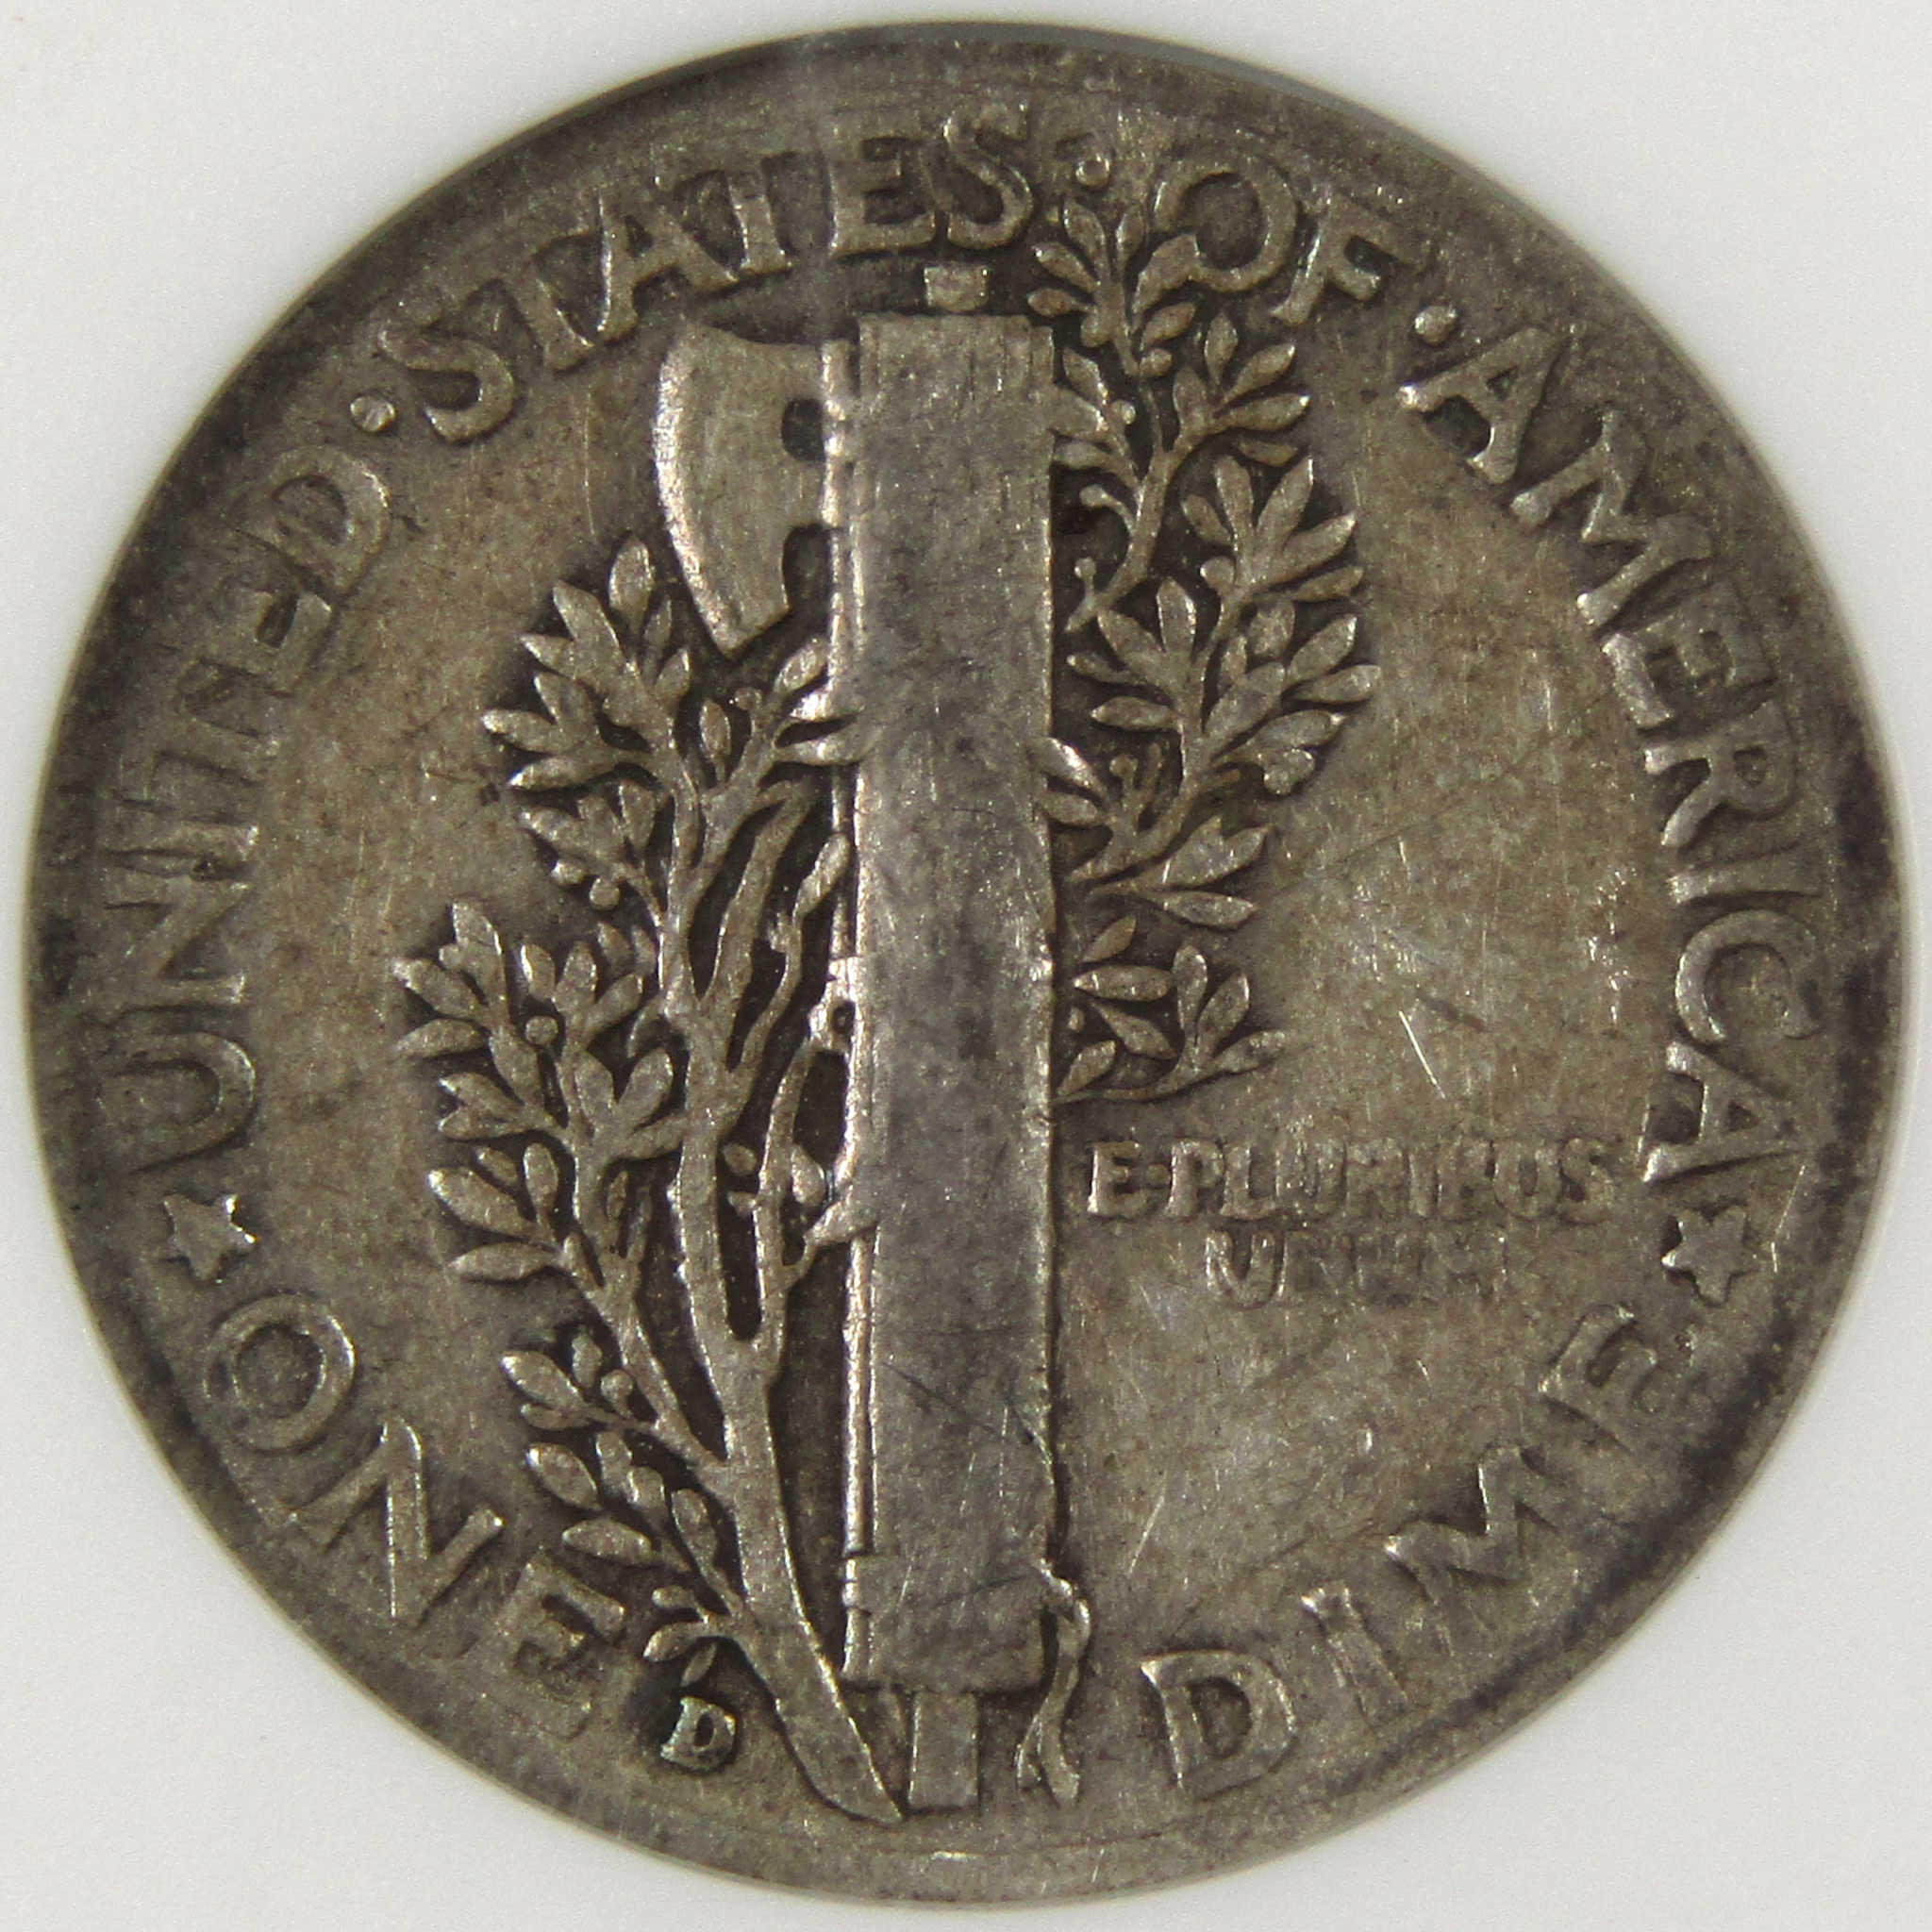 1942/1 D Mercury Dime VG 8 ANACS 90% Silver 10c Coin SKU:I10181